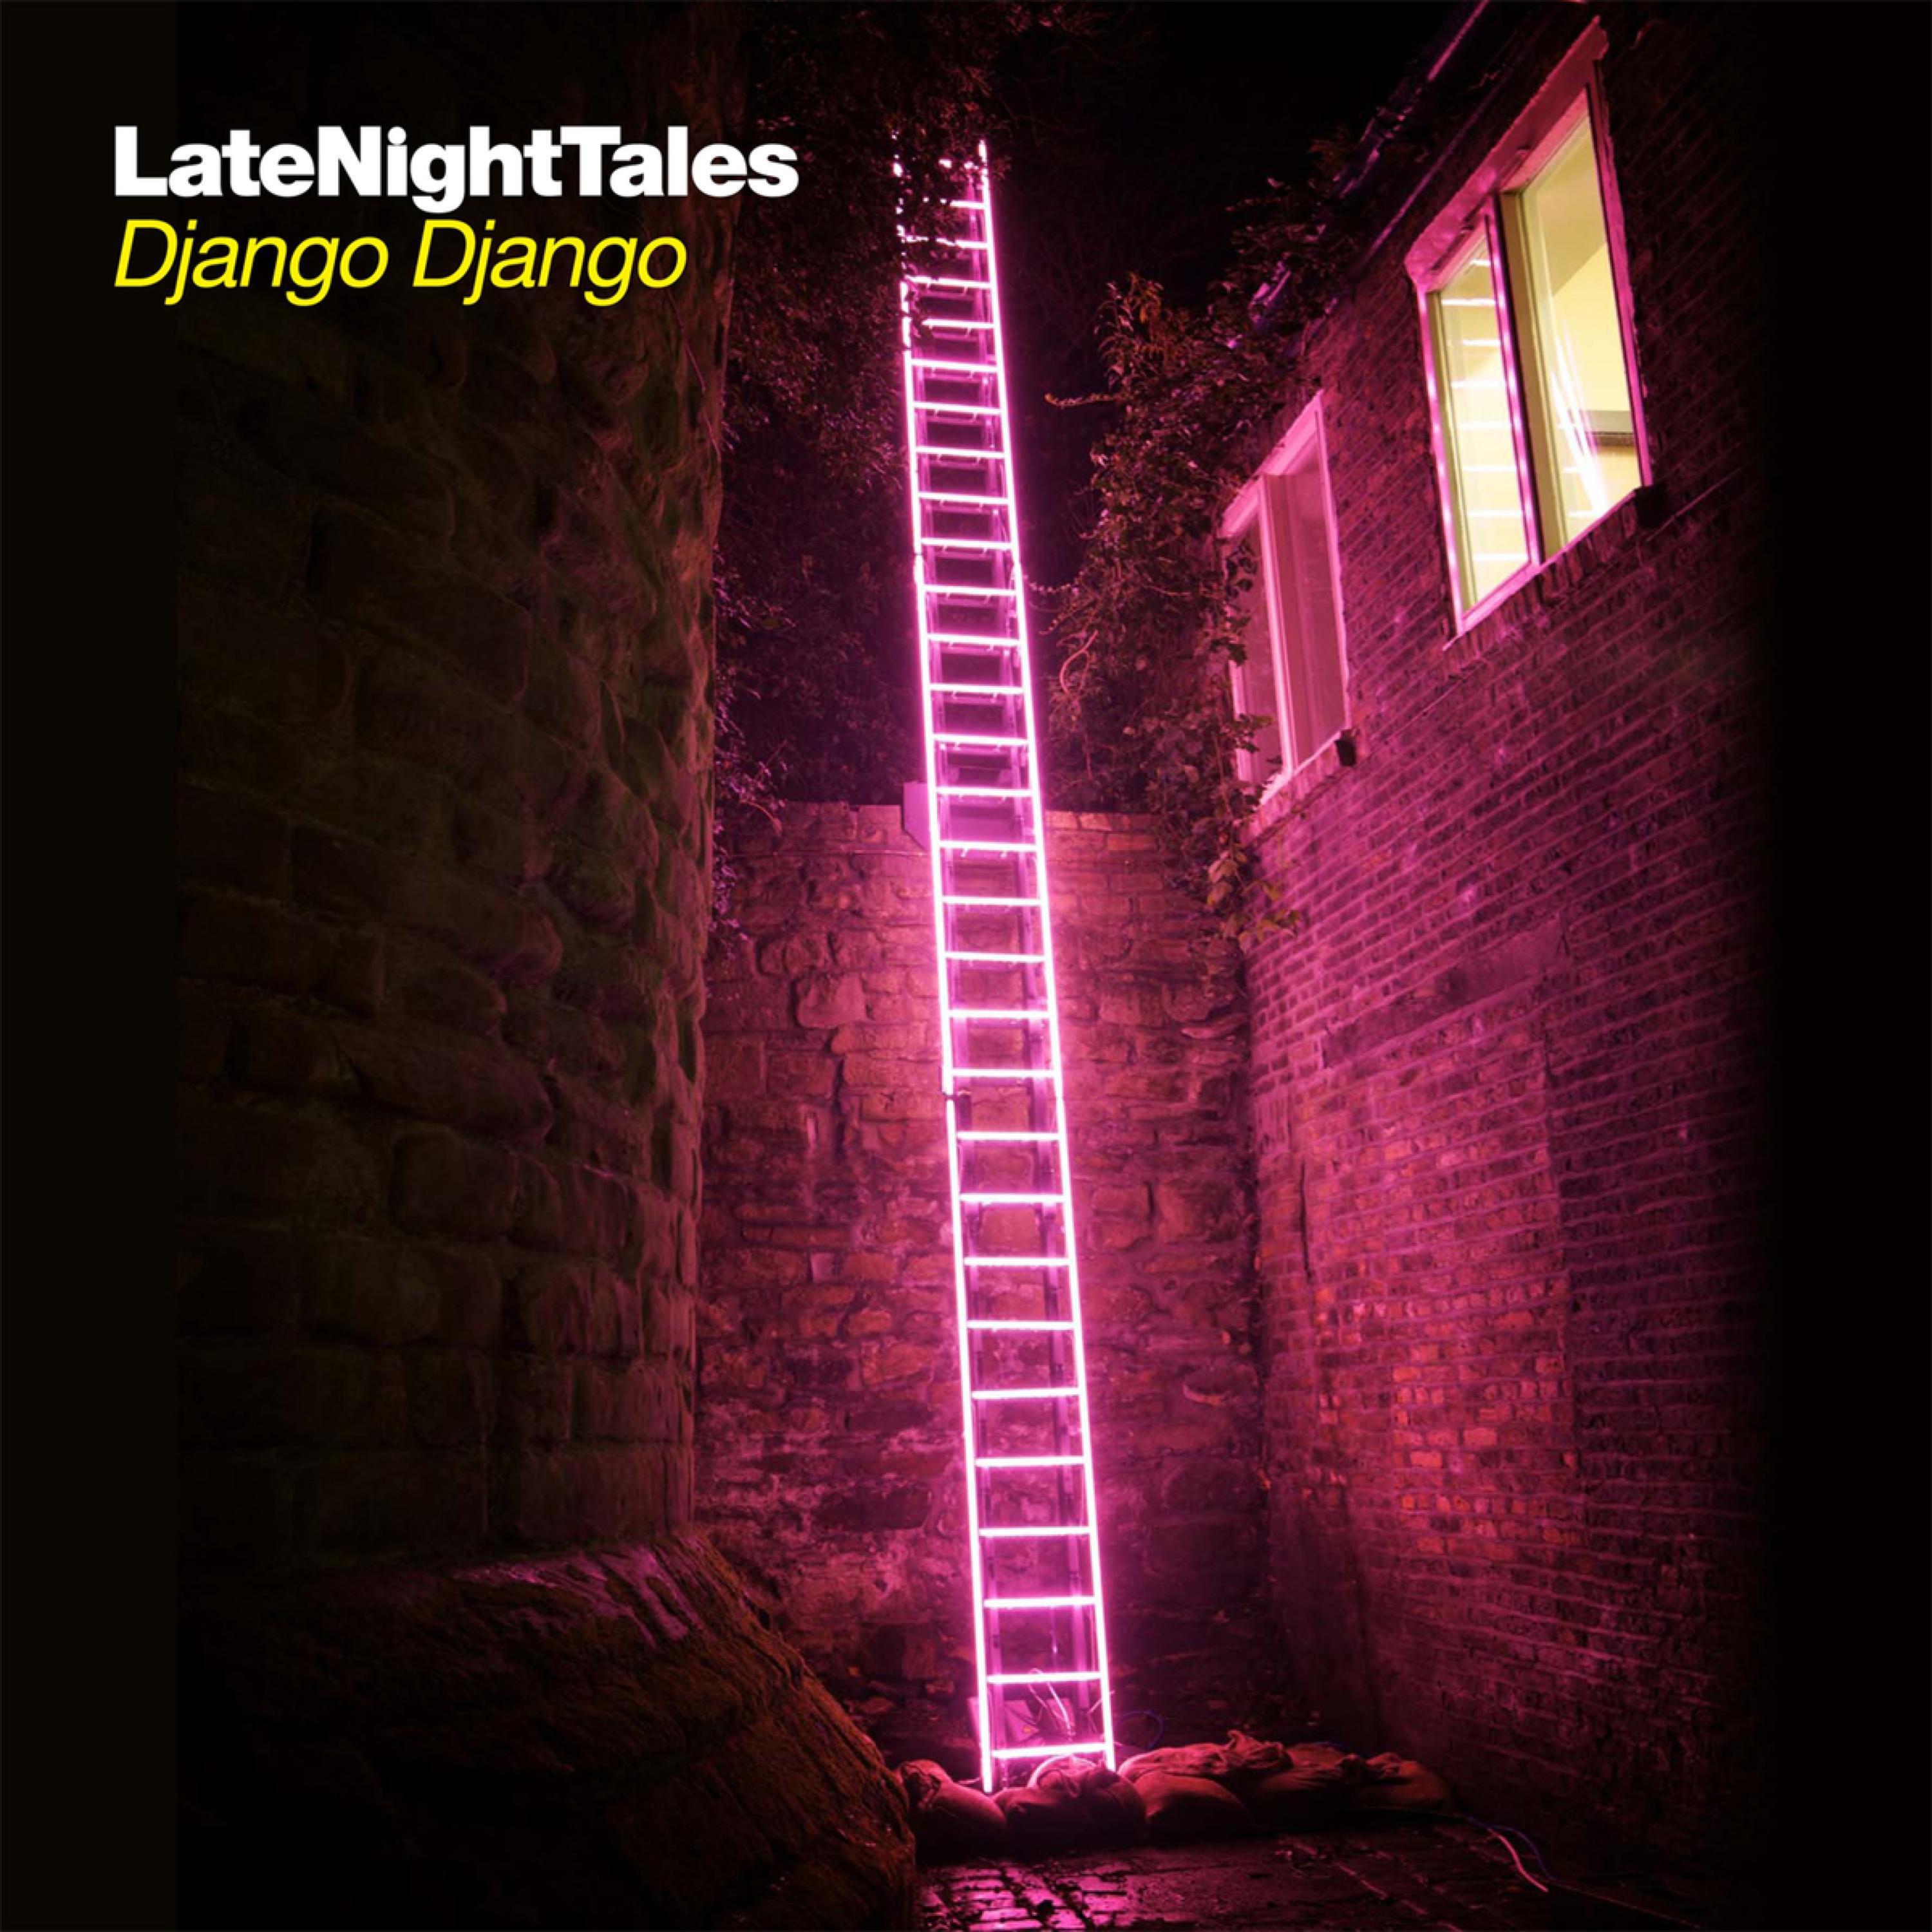 Late Night Tales - Late Night Tales: Django Django (Continuous Mix)